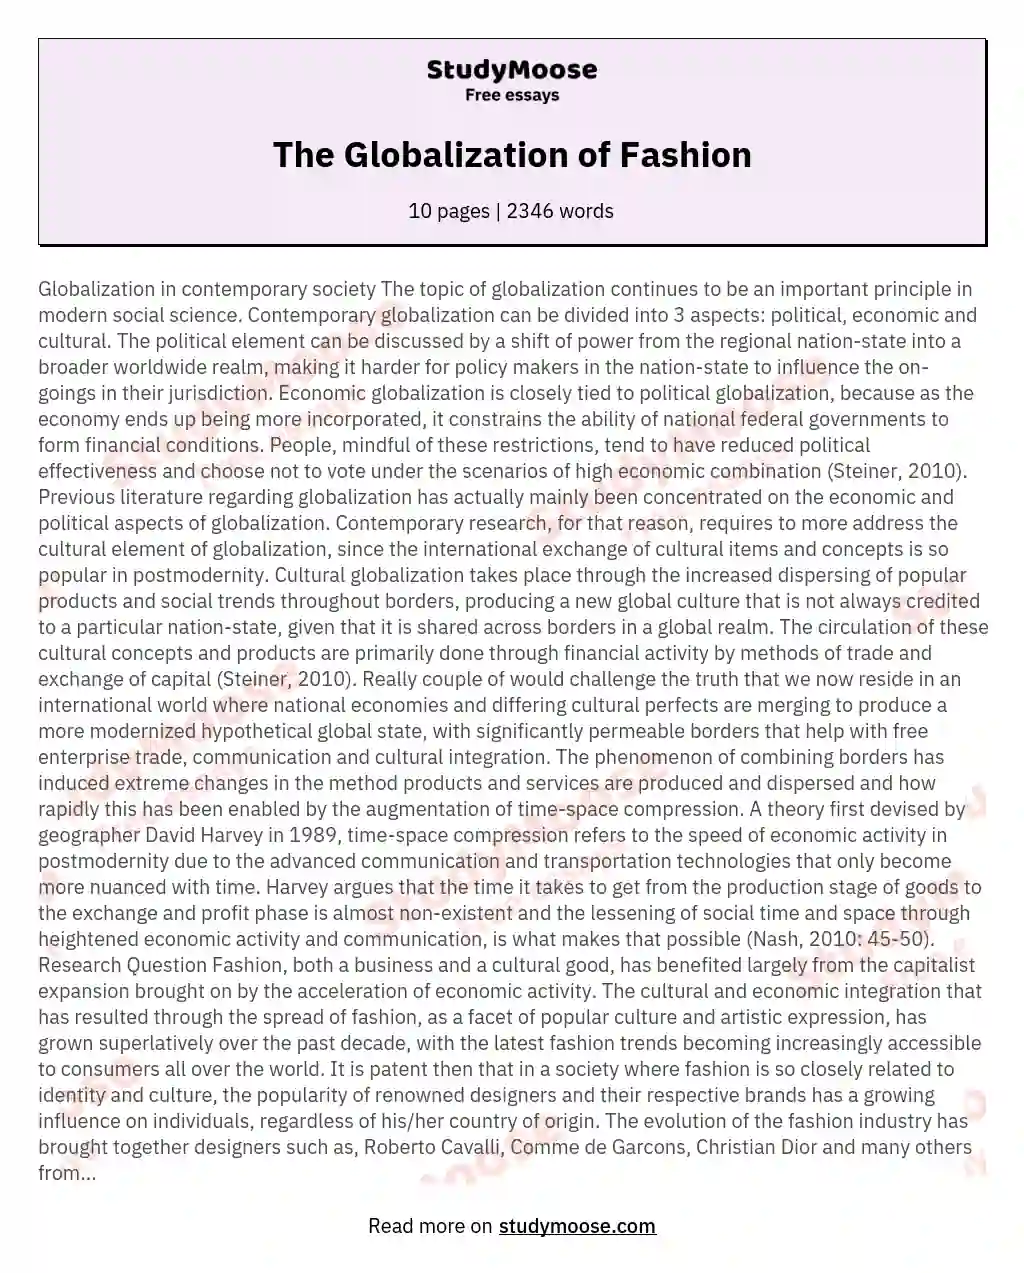 The Globalization of Fashion essay